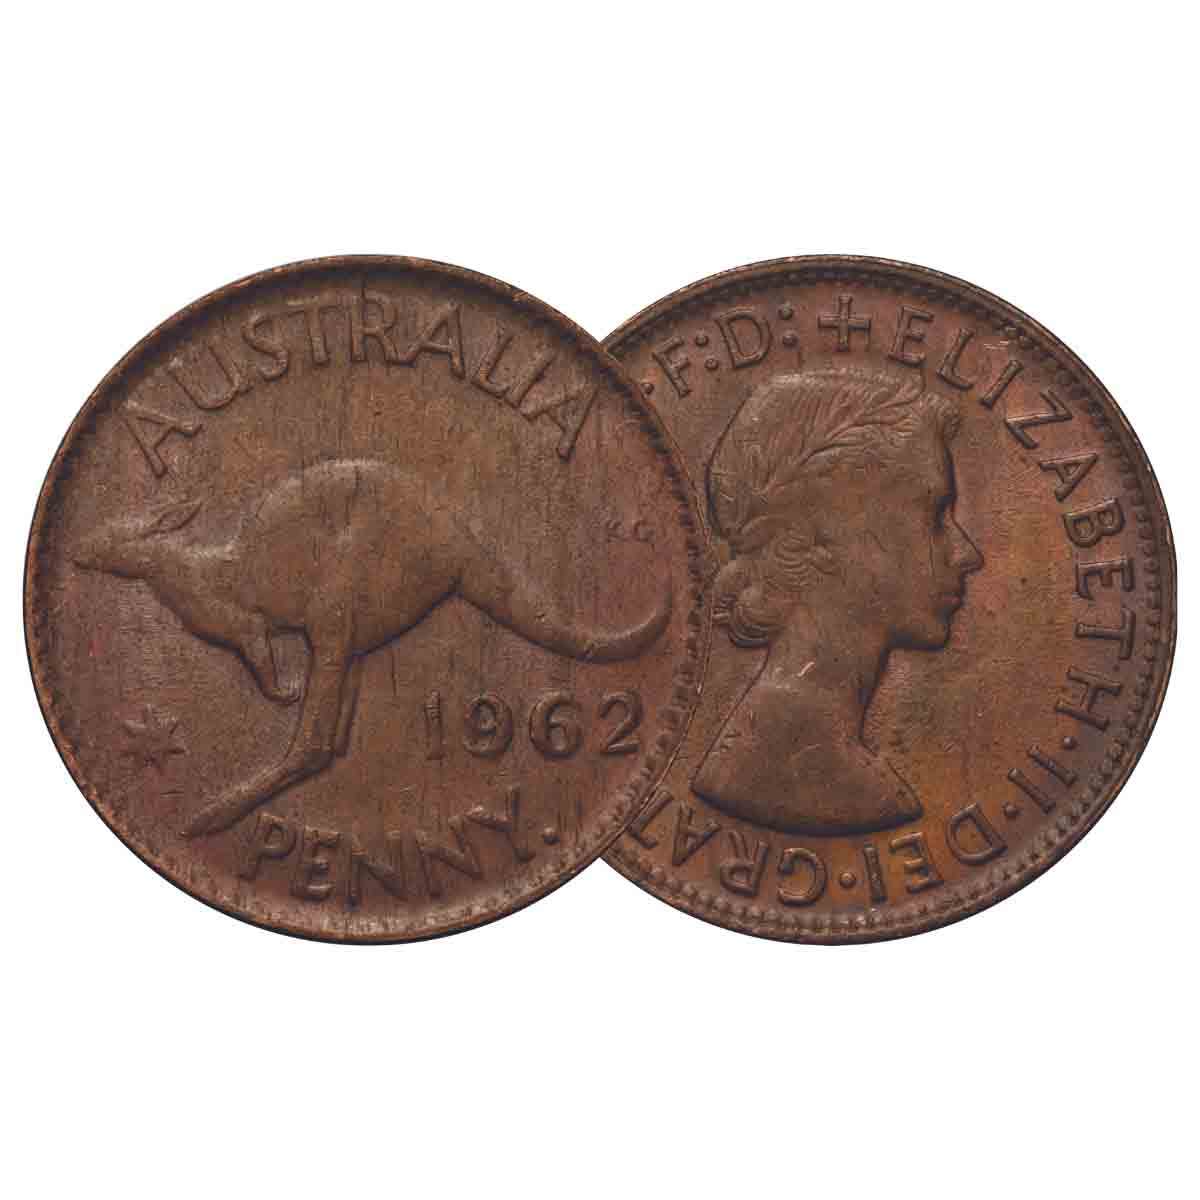 Australia Elizabeth II 1953-64 Very Fine-Extremely Fine 6-Coin Set